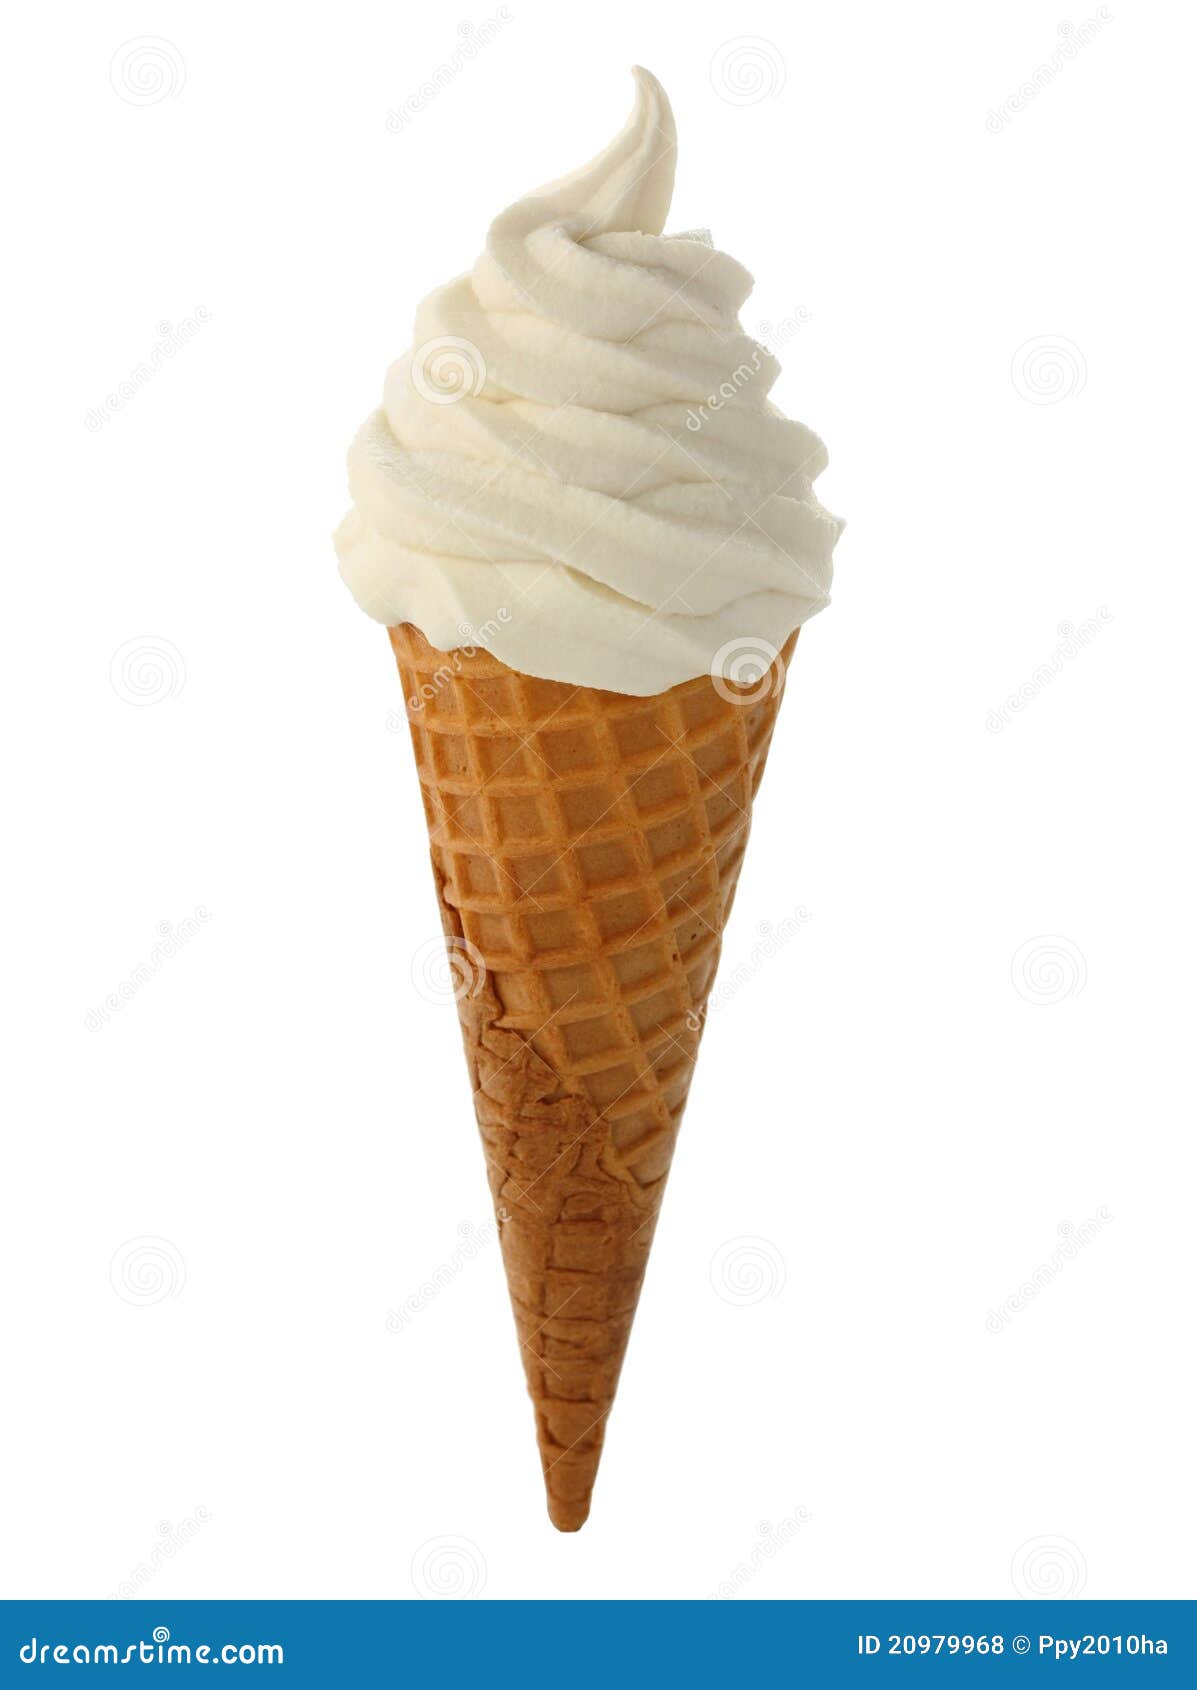 soft serve ice cream on white background